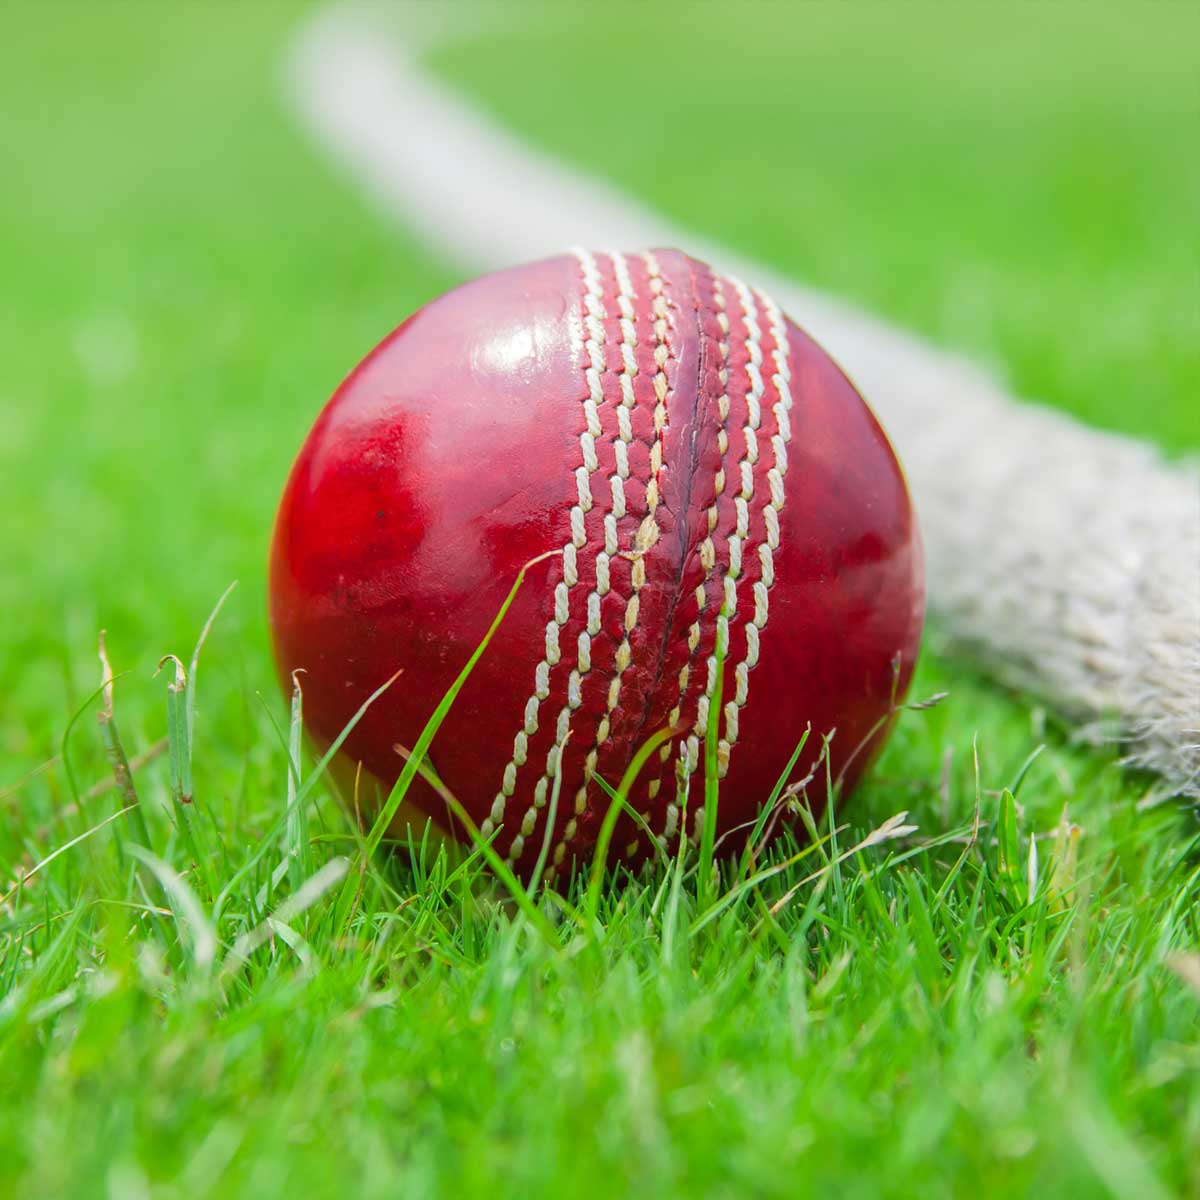 Cricket Balls Manufacturers in Duisburg